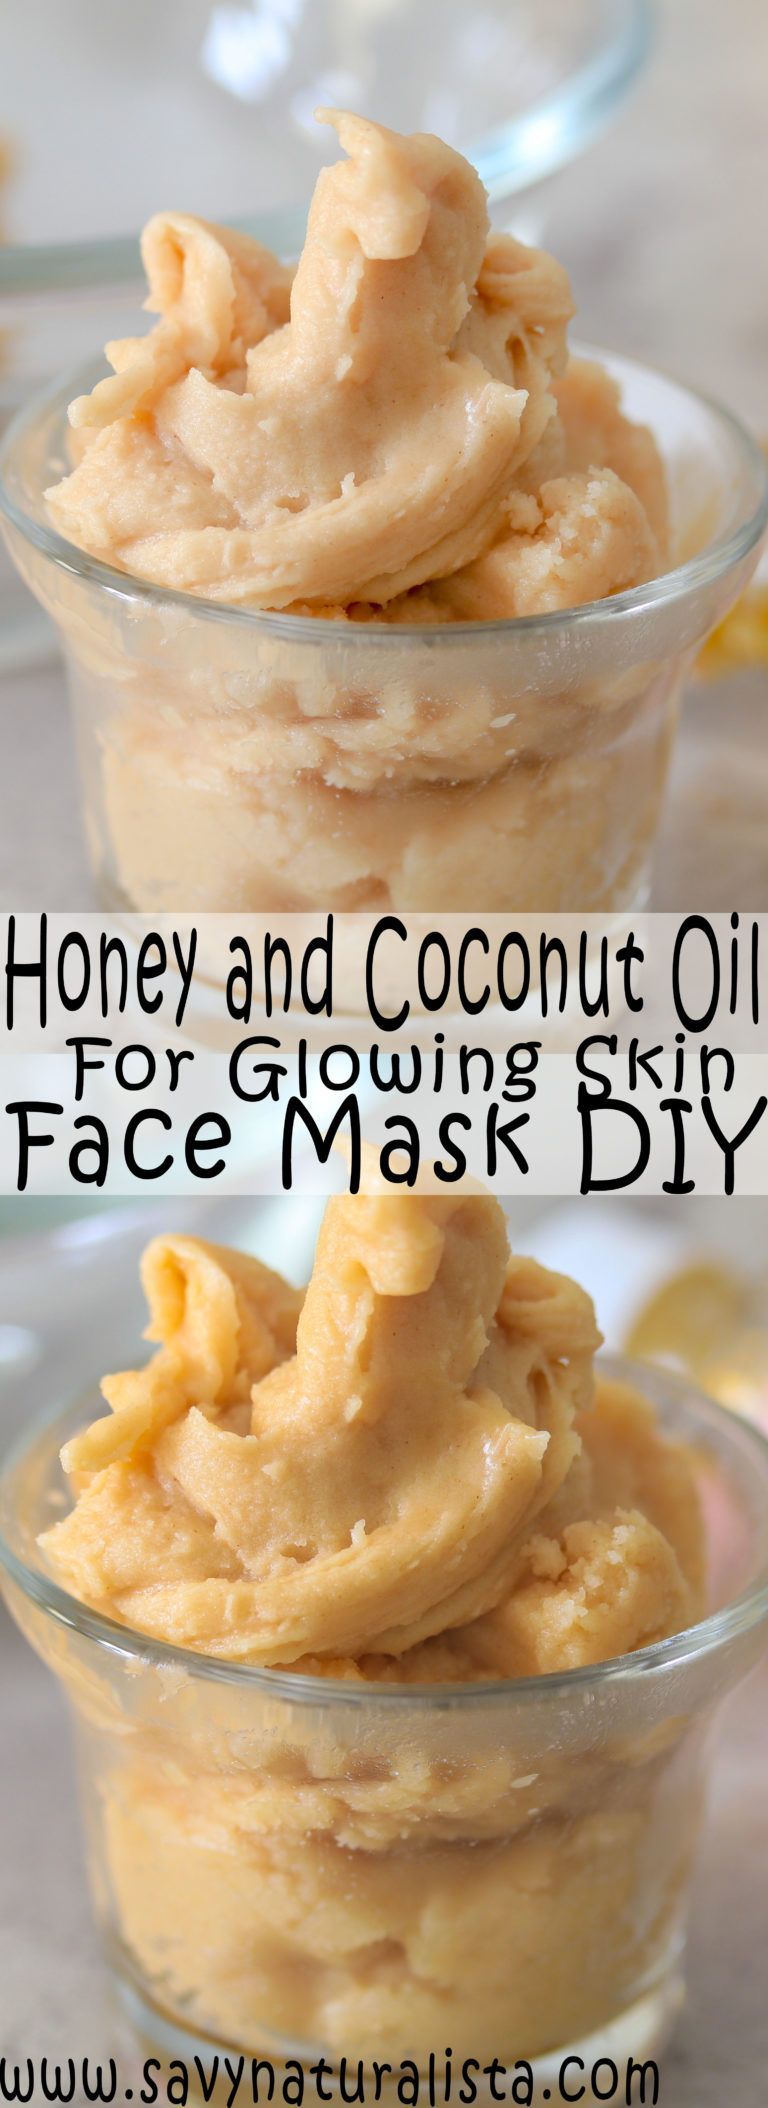 11 diy Face Mask honey ideas